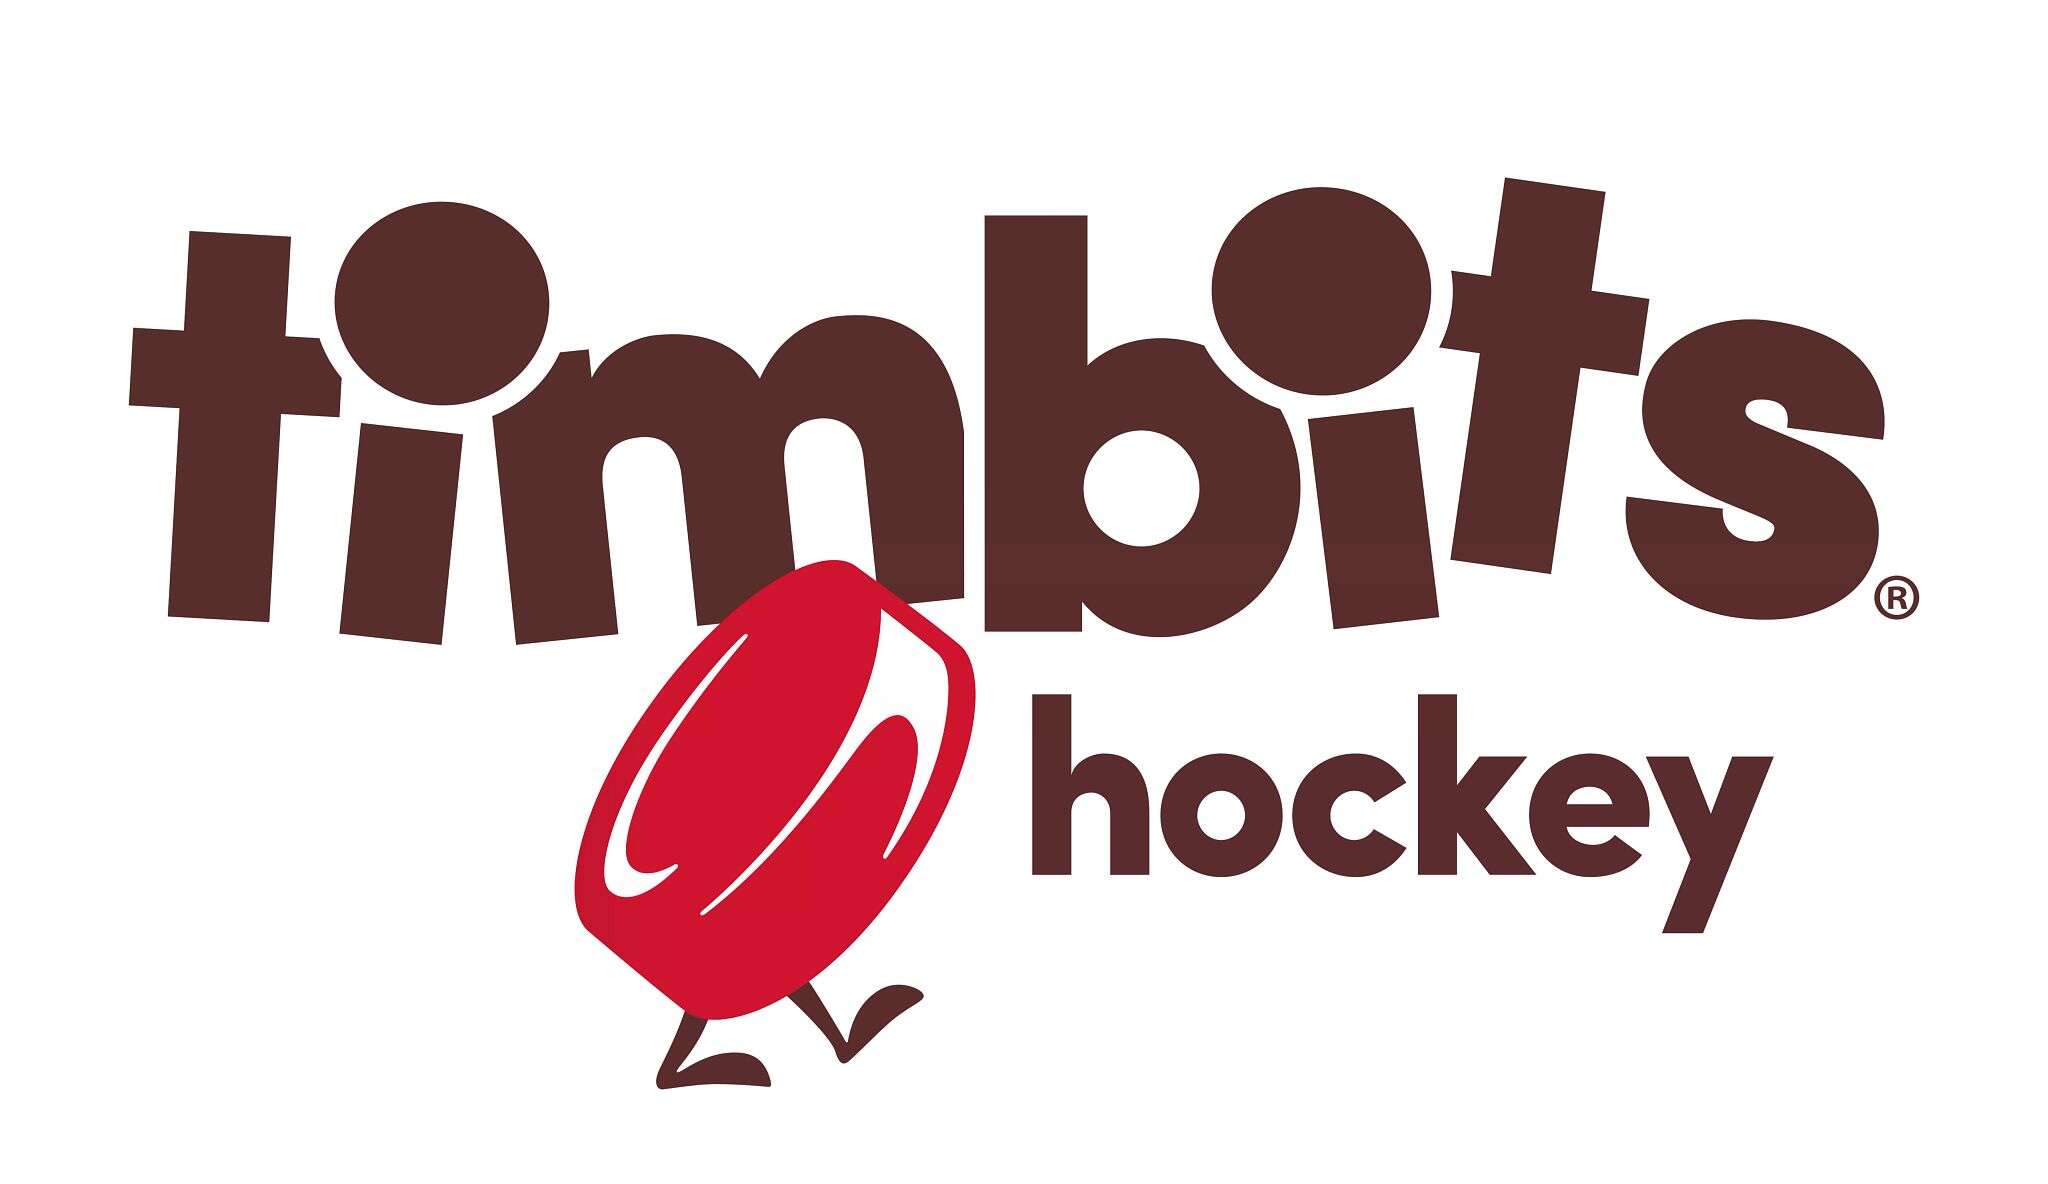 Tim Hortons Timbits Hockey